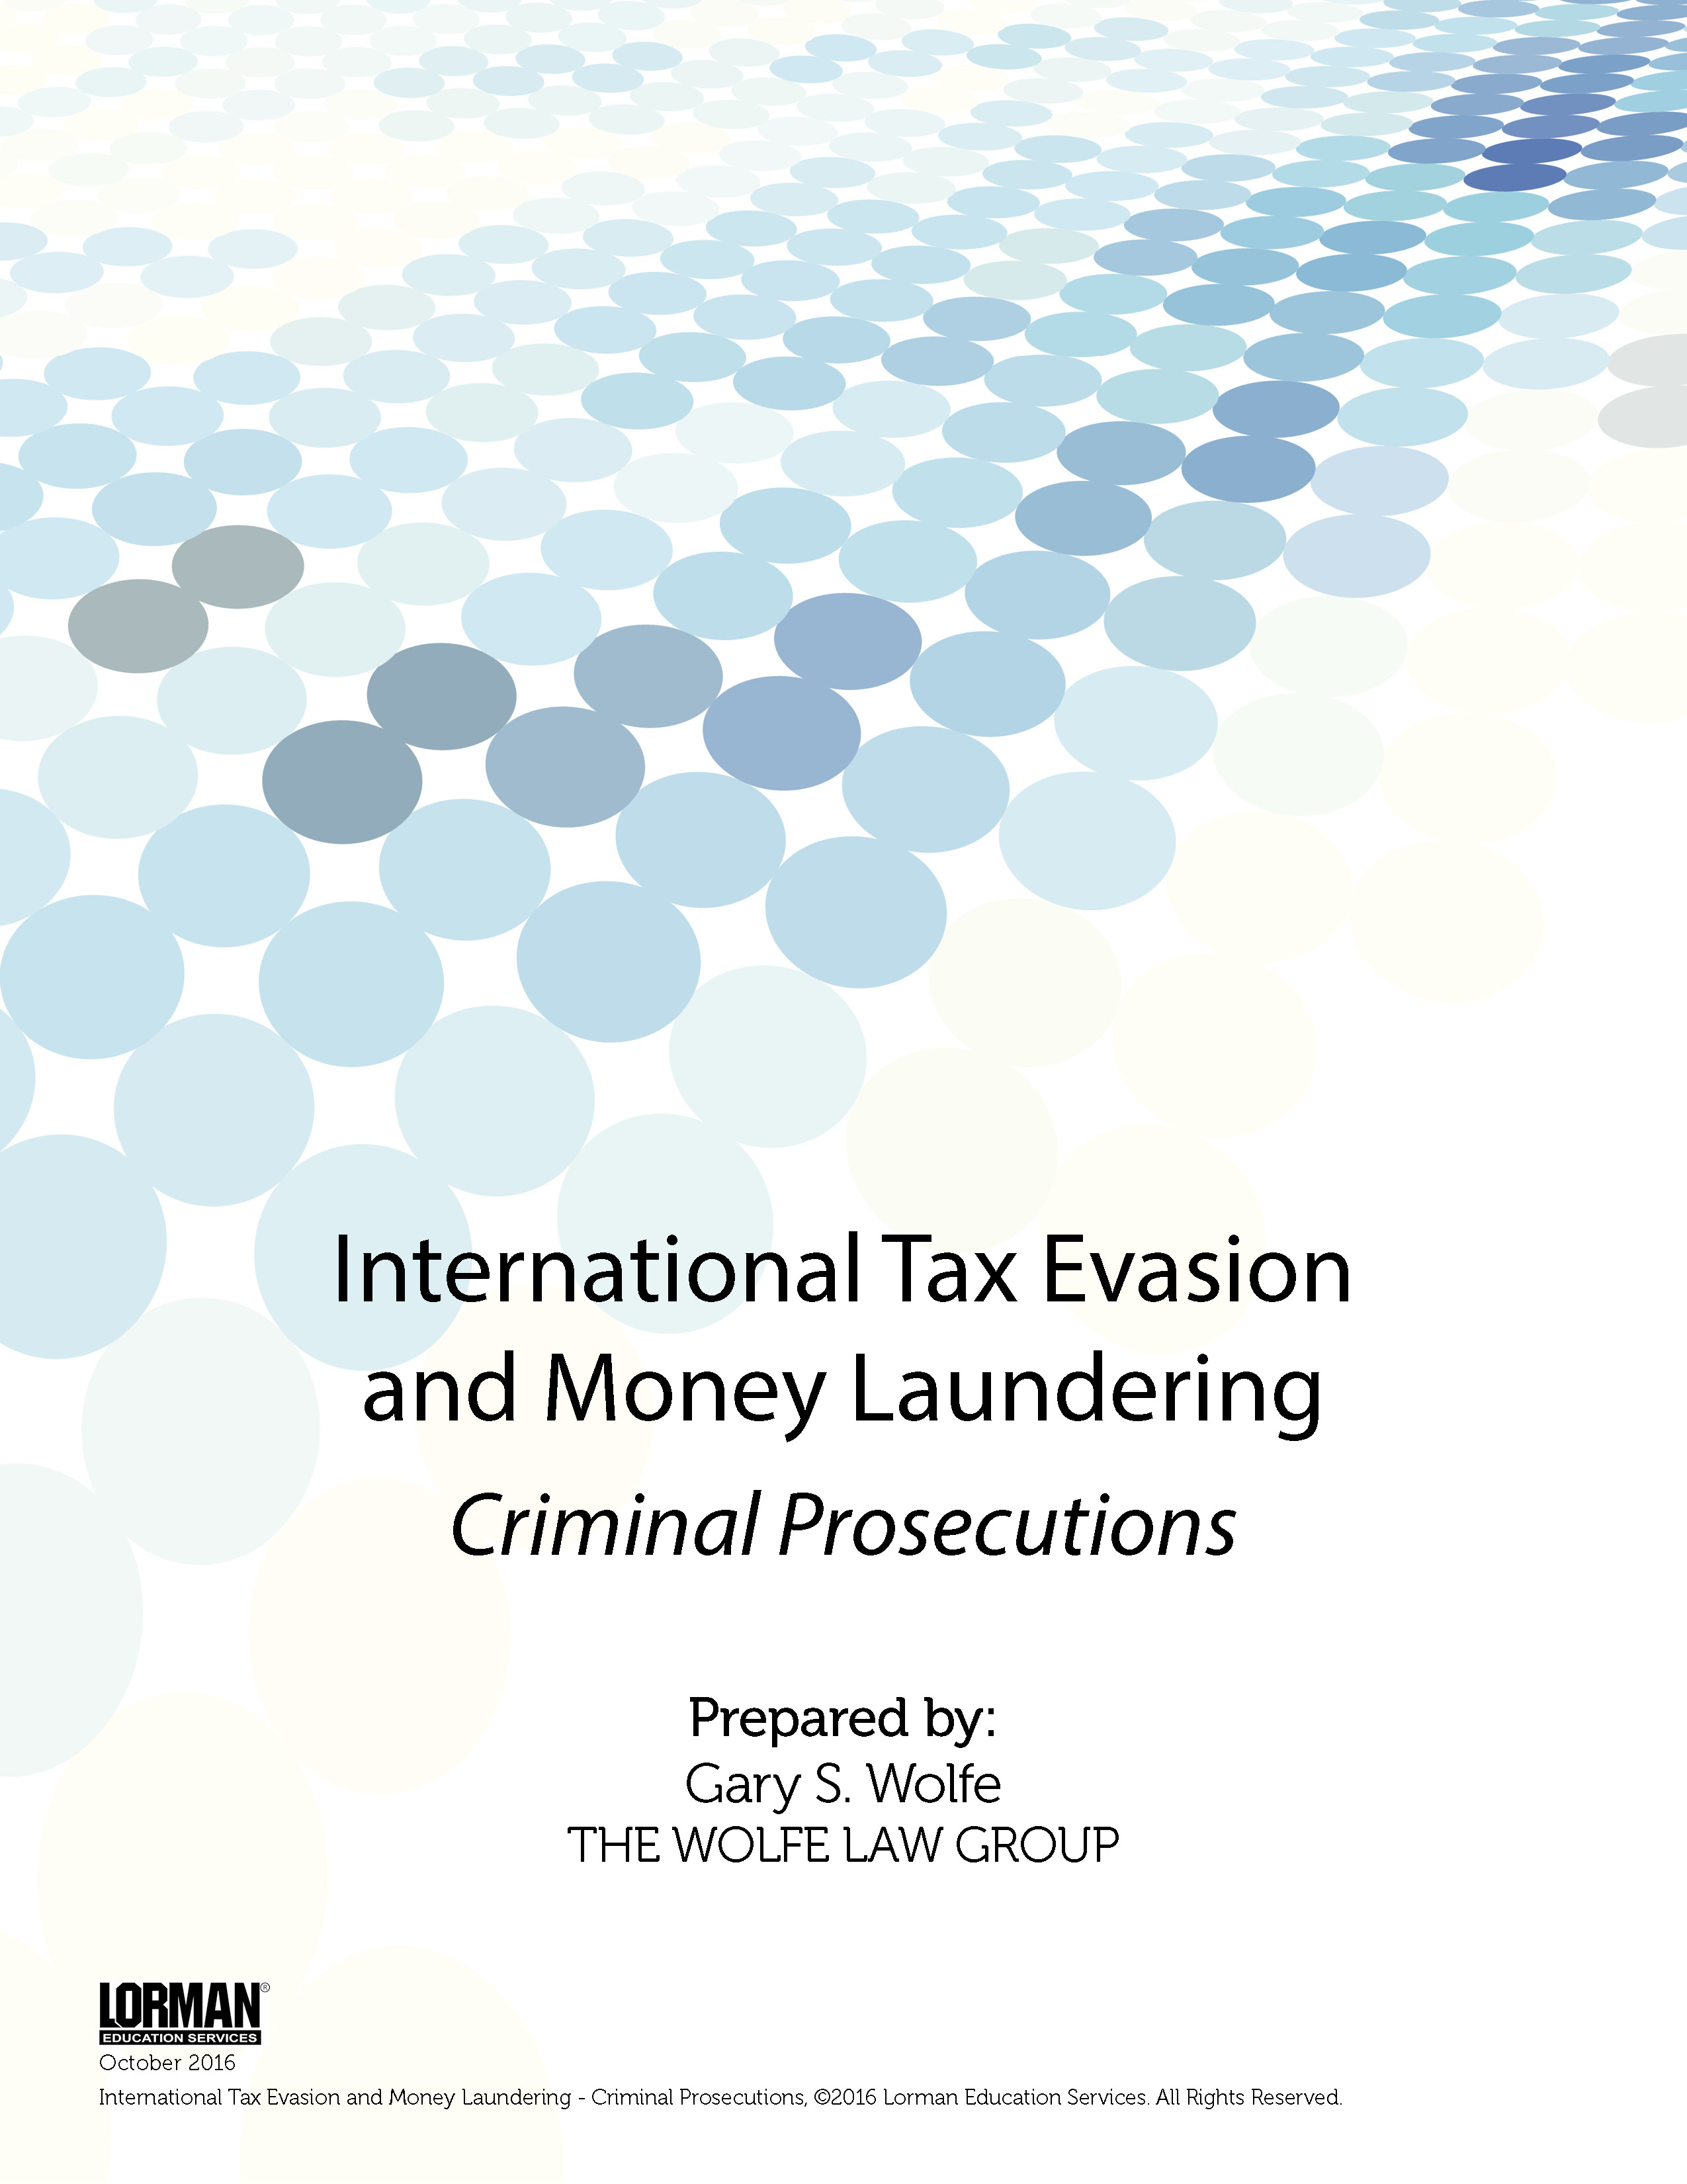 International Tax Evasion and Money Laundering - Criminal Prosecutions